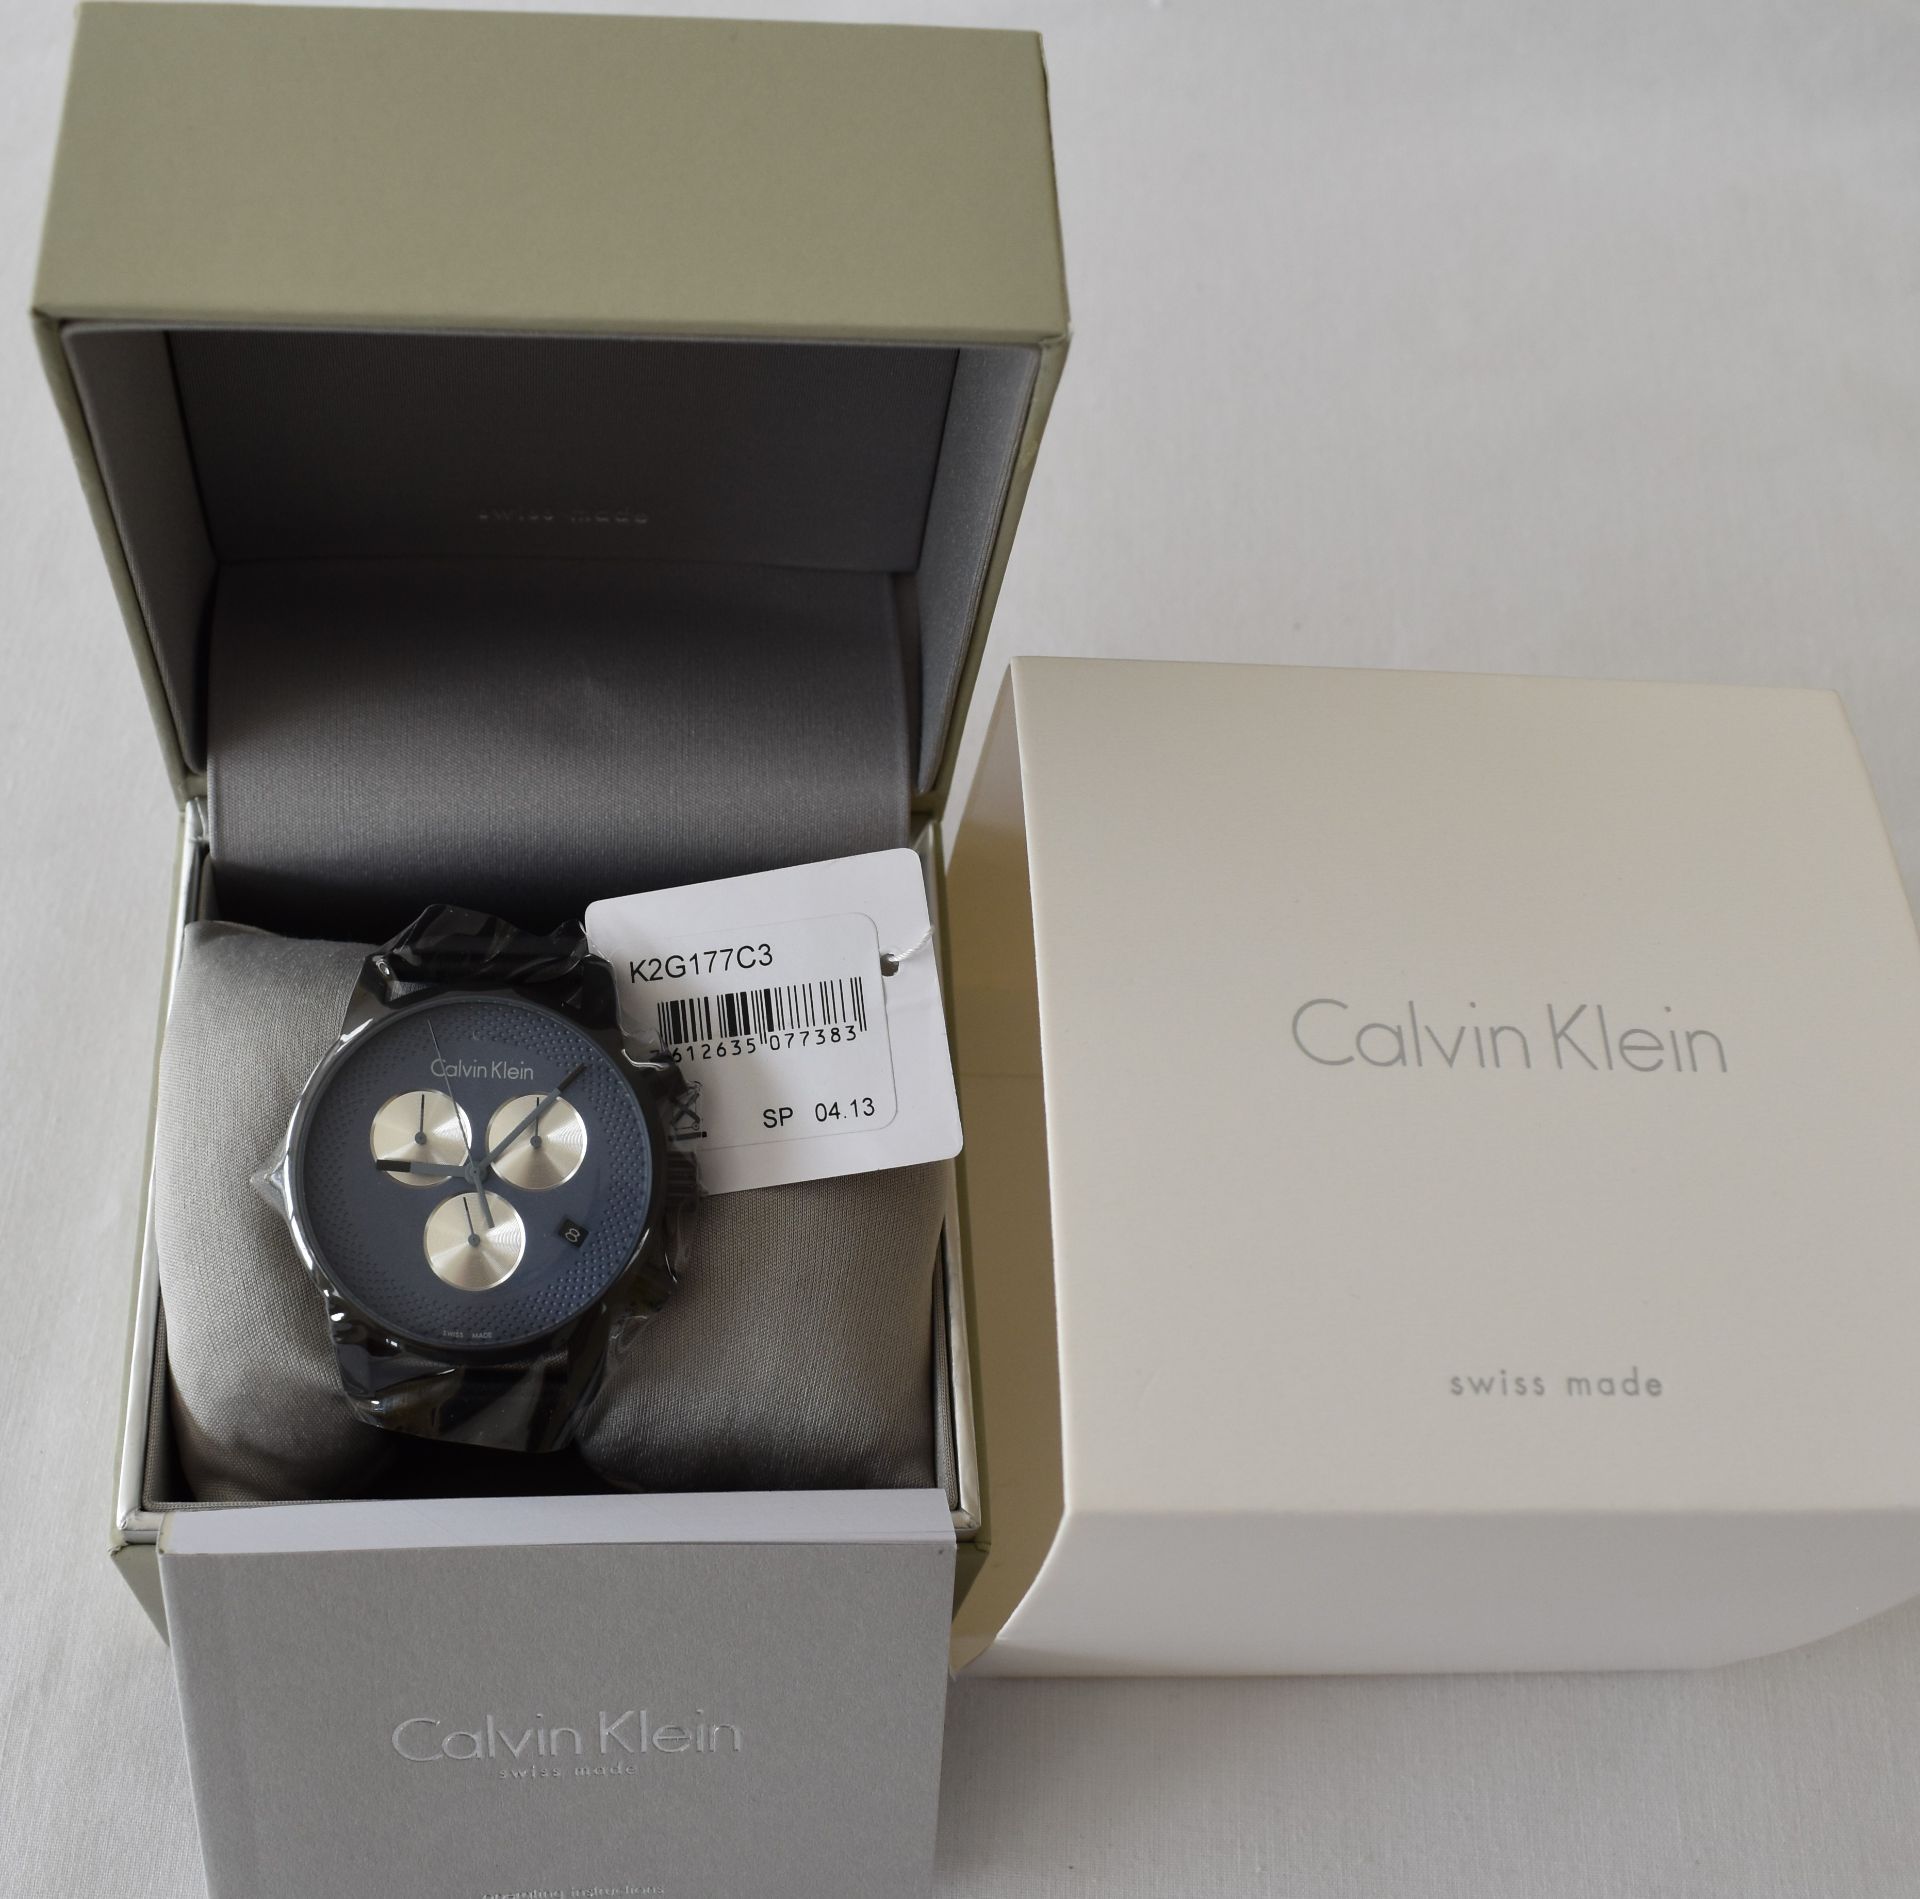 Calvin Klein K2G177C3 Men's Watch - Image 2 of 3